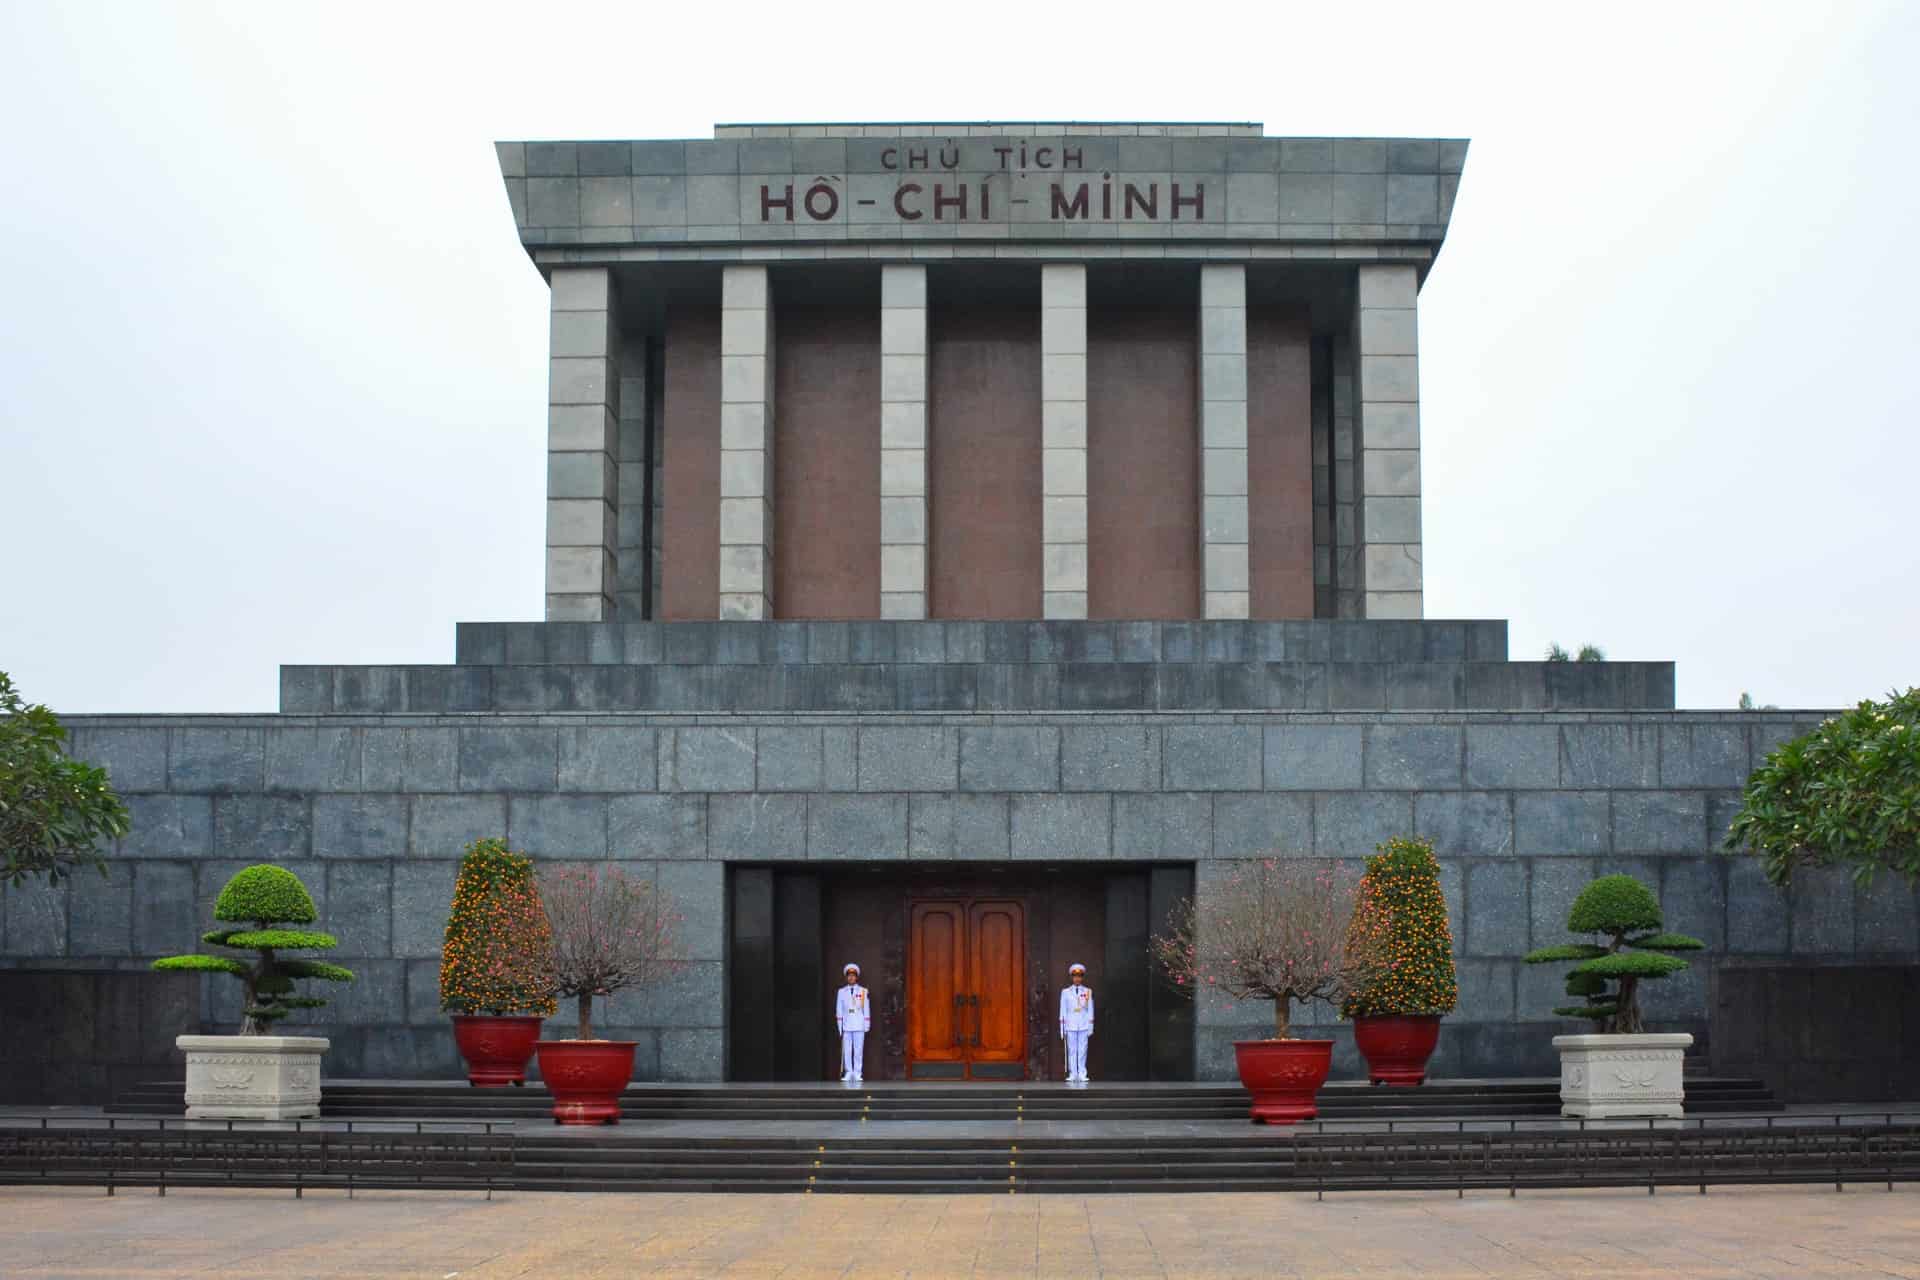 Best things to do in Hanoi Vietnam - Paul Kennedy - Ho Chi Minh Mausoleum by Hans-Jürgen Weinhardt on Unsplash